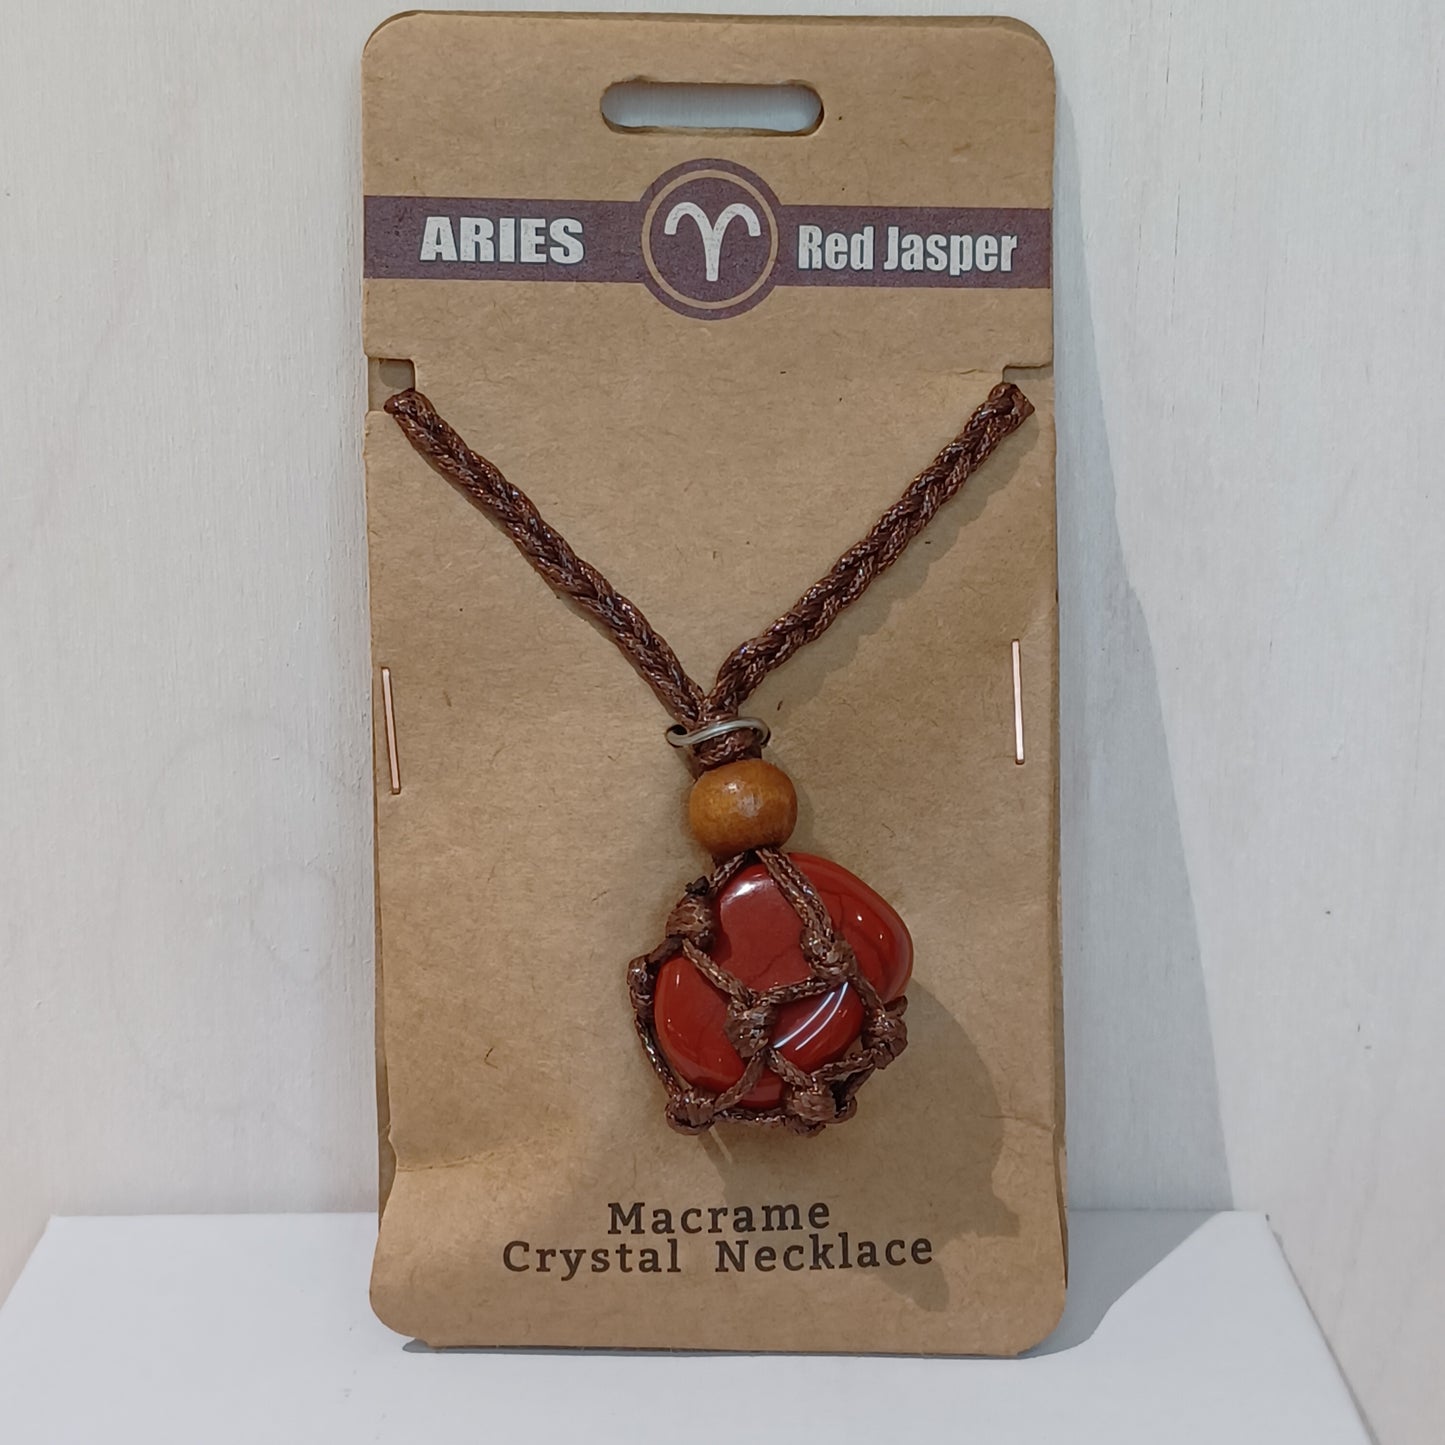 Macramé Crystal Necklace - Aries Red Jasper